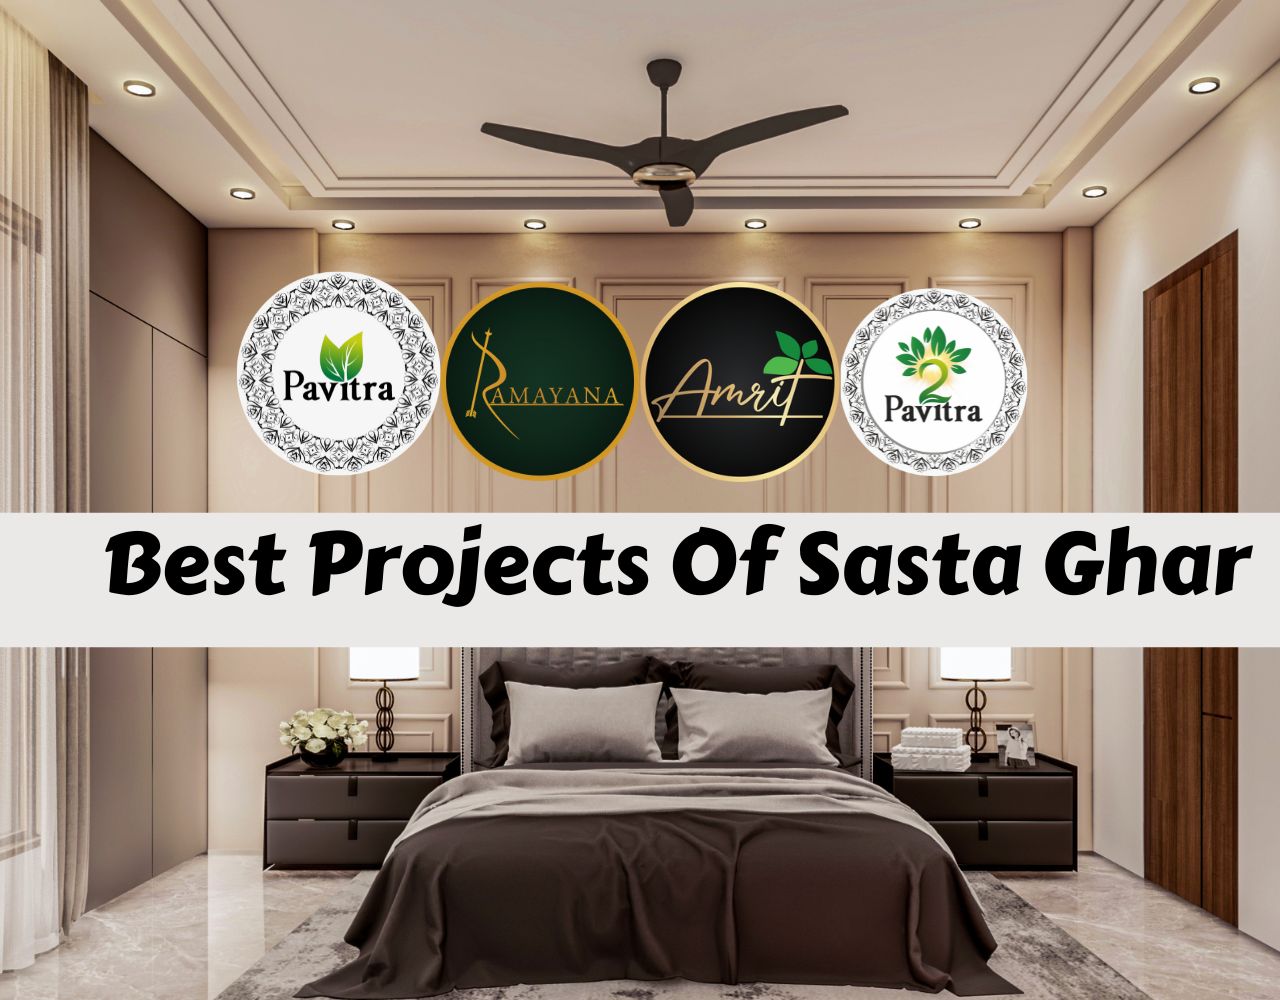 Best Projects Of Sasta Ghar